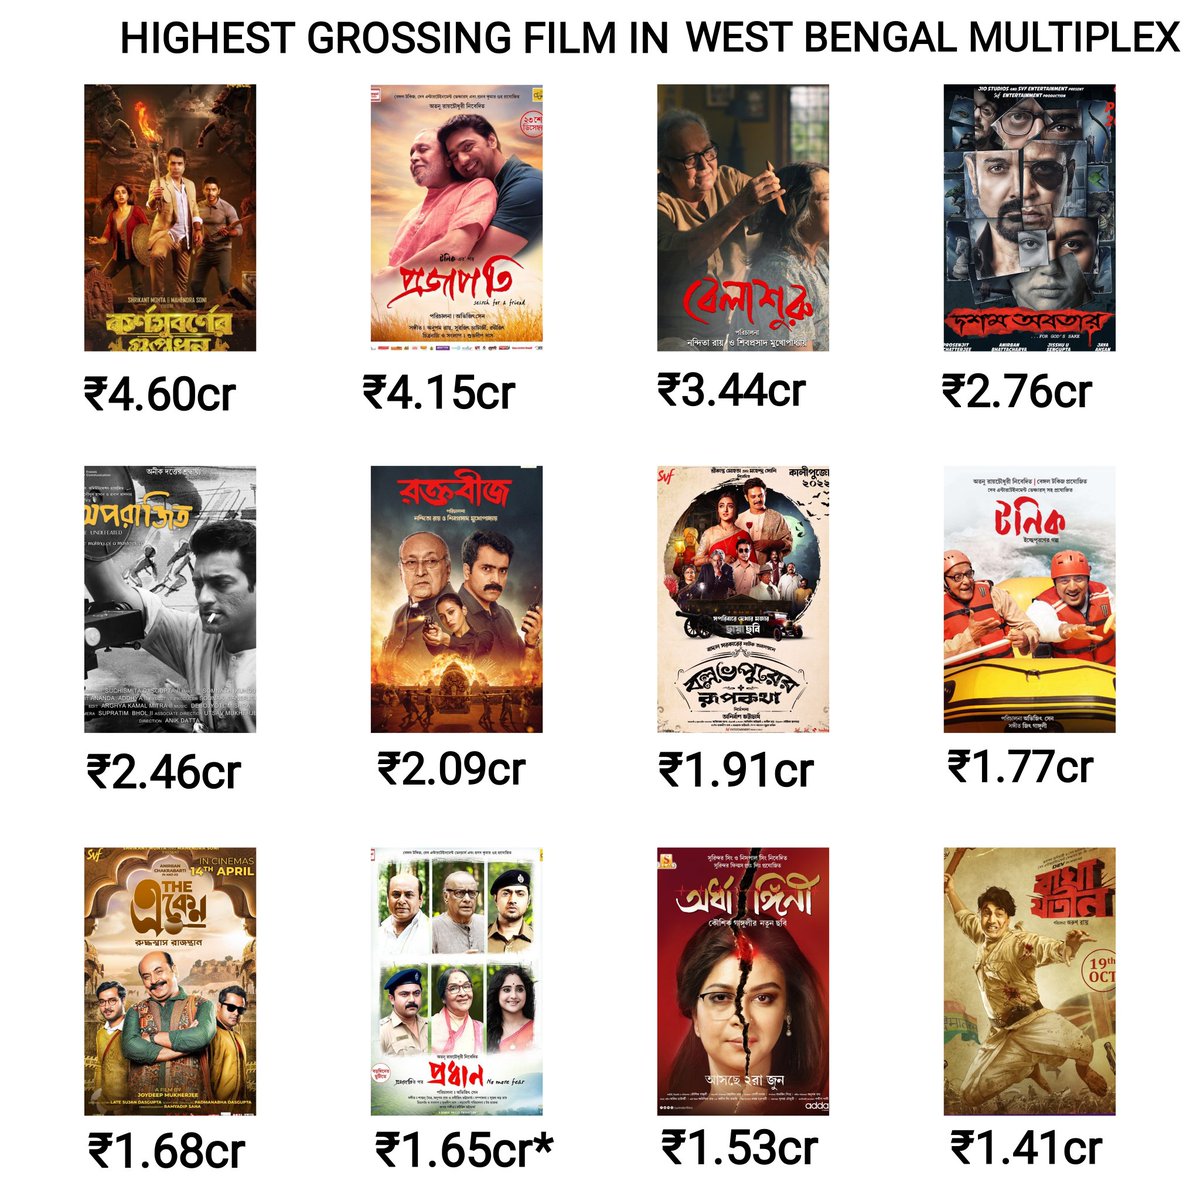 TOP GROSSING FILMS IN MULTIPLEX-
1- #KarnaSubarnerGuptodhon- ₹4.60cr
2- #Projapati- ₹4.15cr
3- #Belashuru- ₹3.44cr
4- #DawshomAwbotaar- ₹2.76cr
5- #Aparajito- ₹2.46cr
6- #Raktabeej- ₹2.09cr
7- #BPRR- ₹1.91cr
8- #Tonic- ₹1.77cr
9- #TheEken- ₹1.68cr
10- #Pradhan - ₹1.64cr